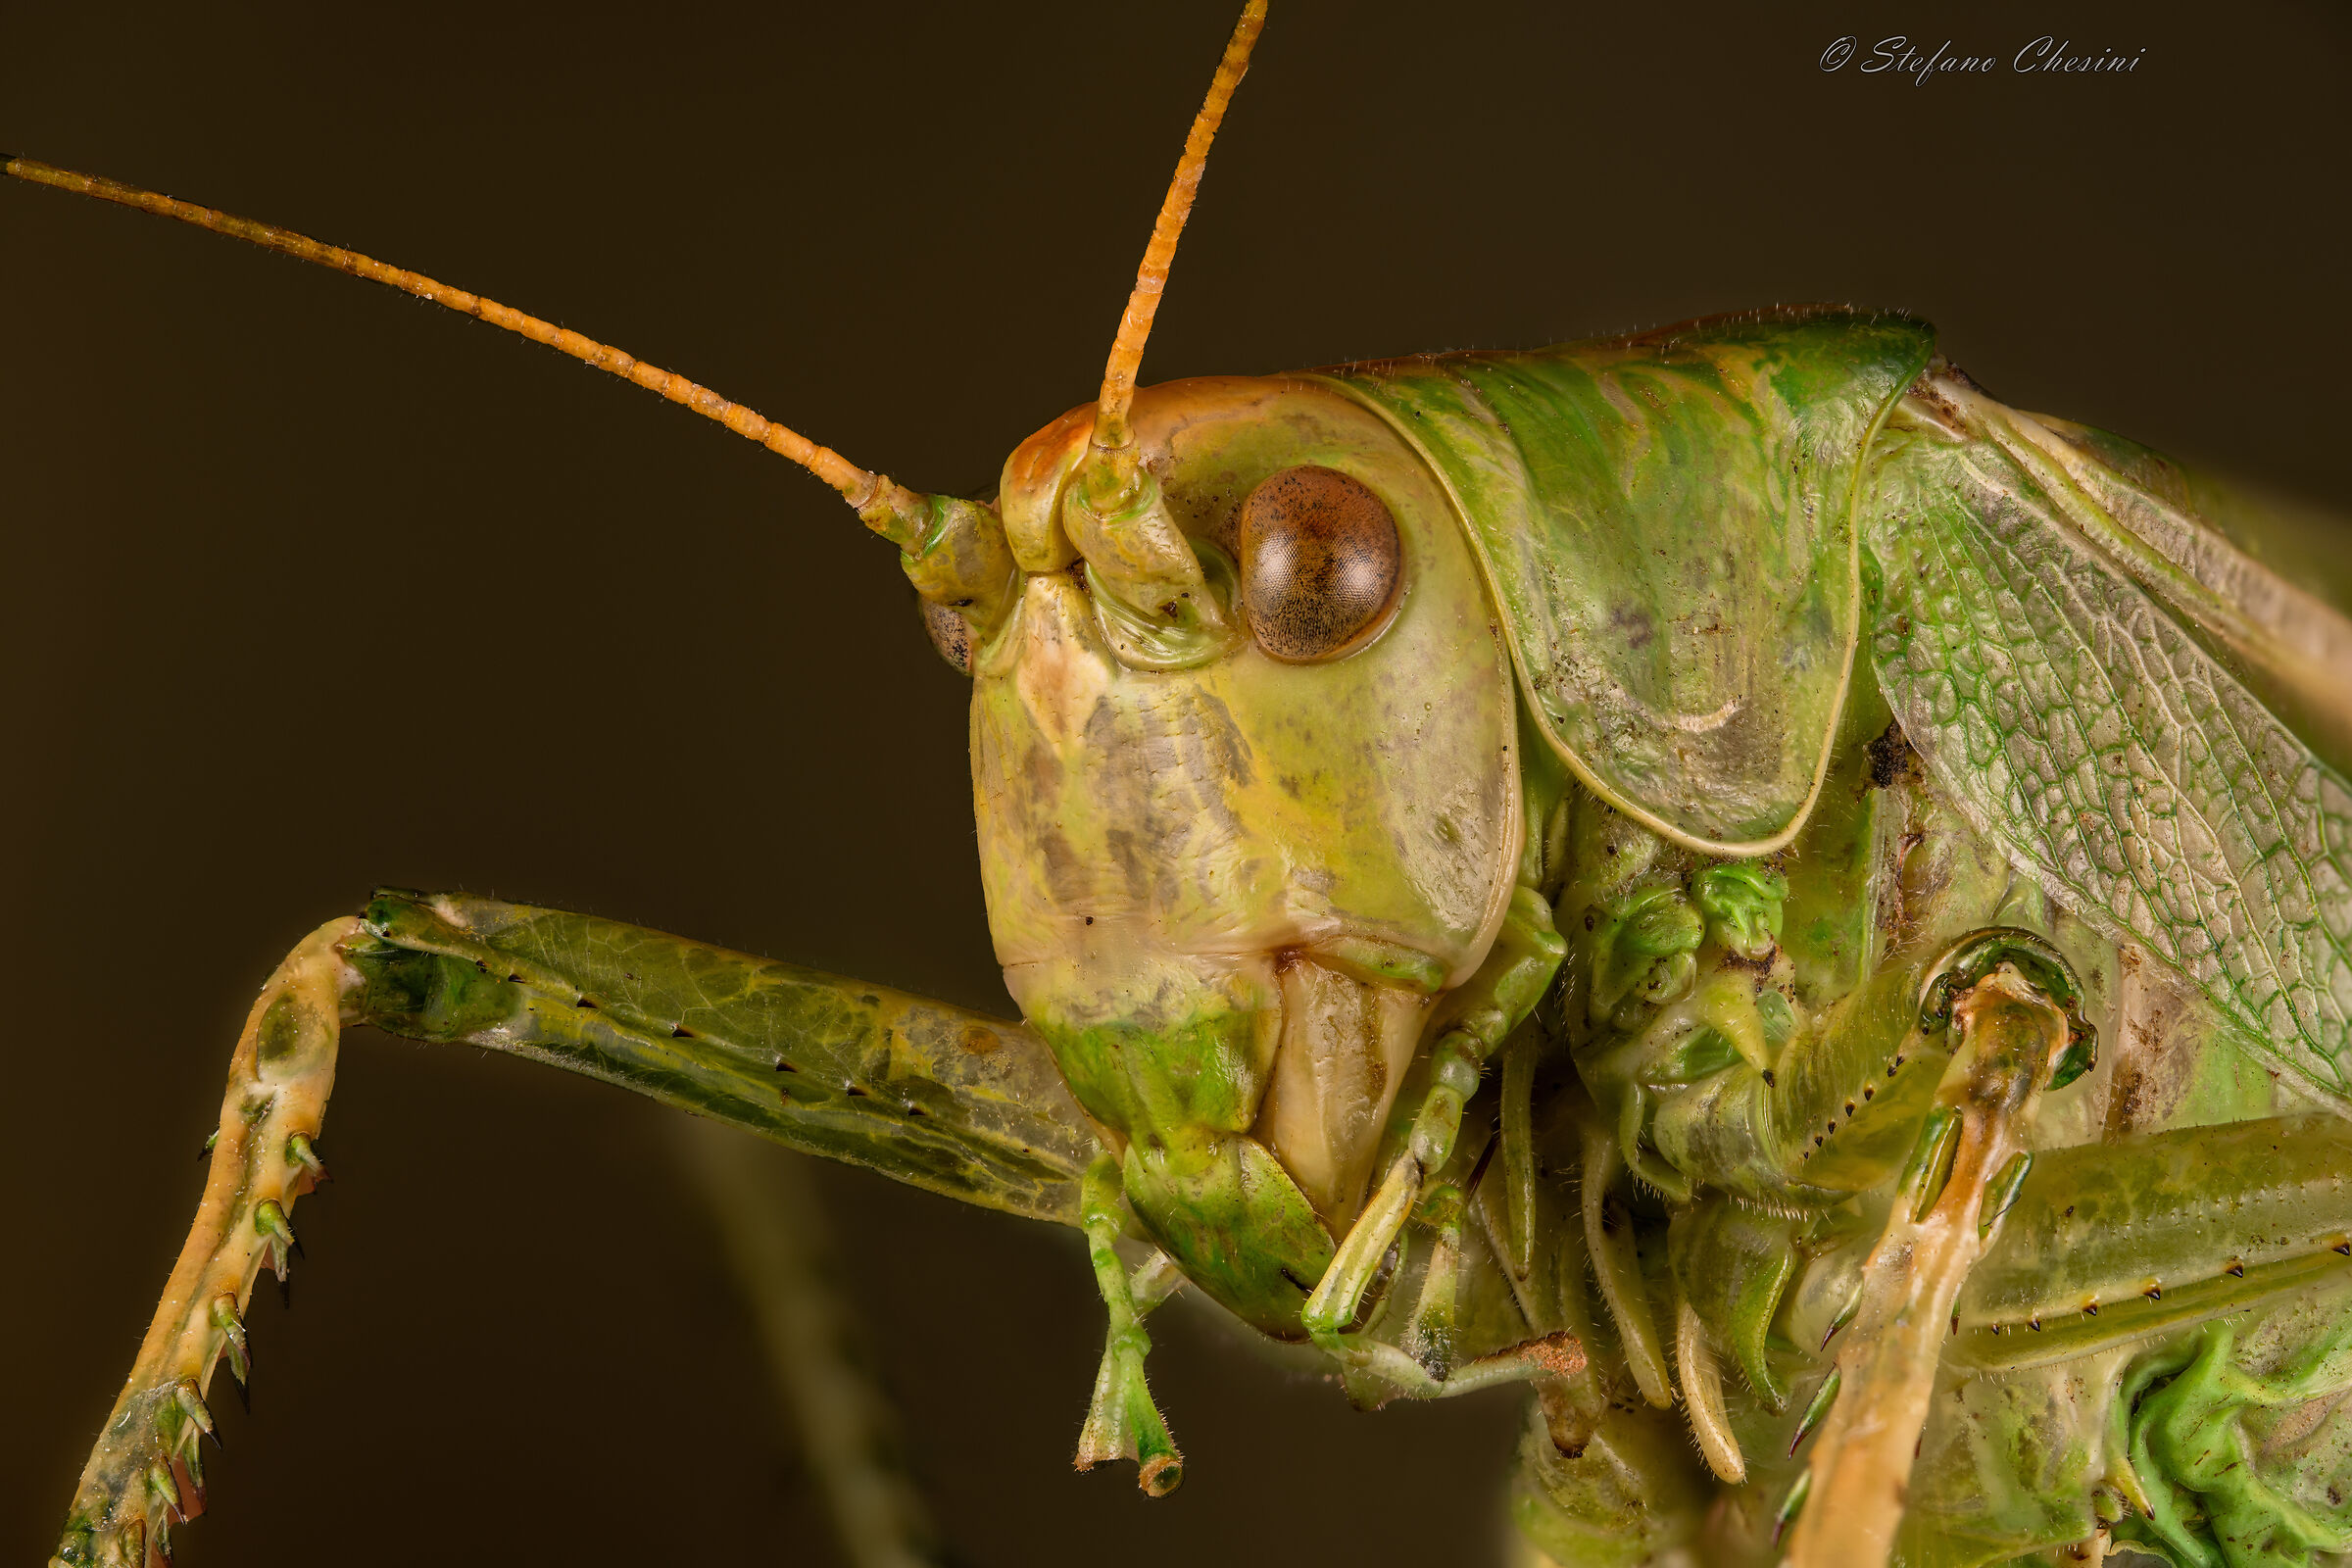 Portrait of a grasshopper...